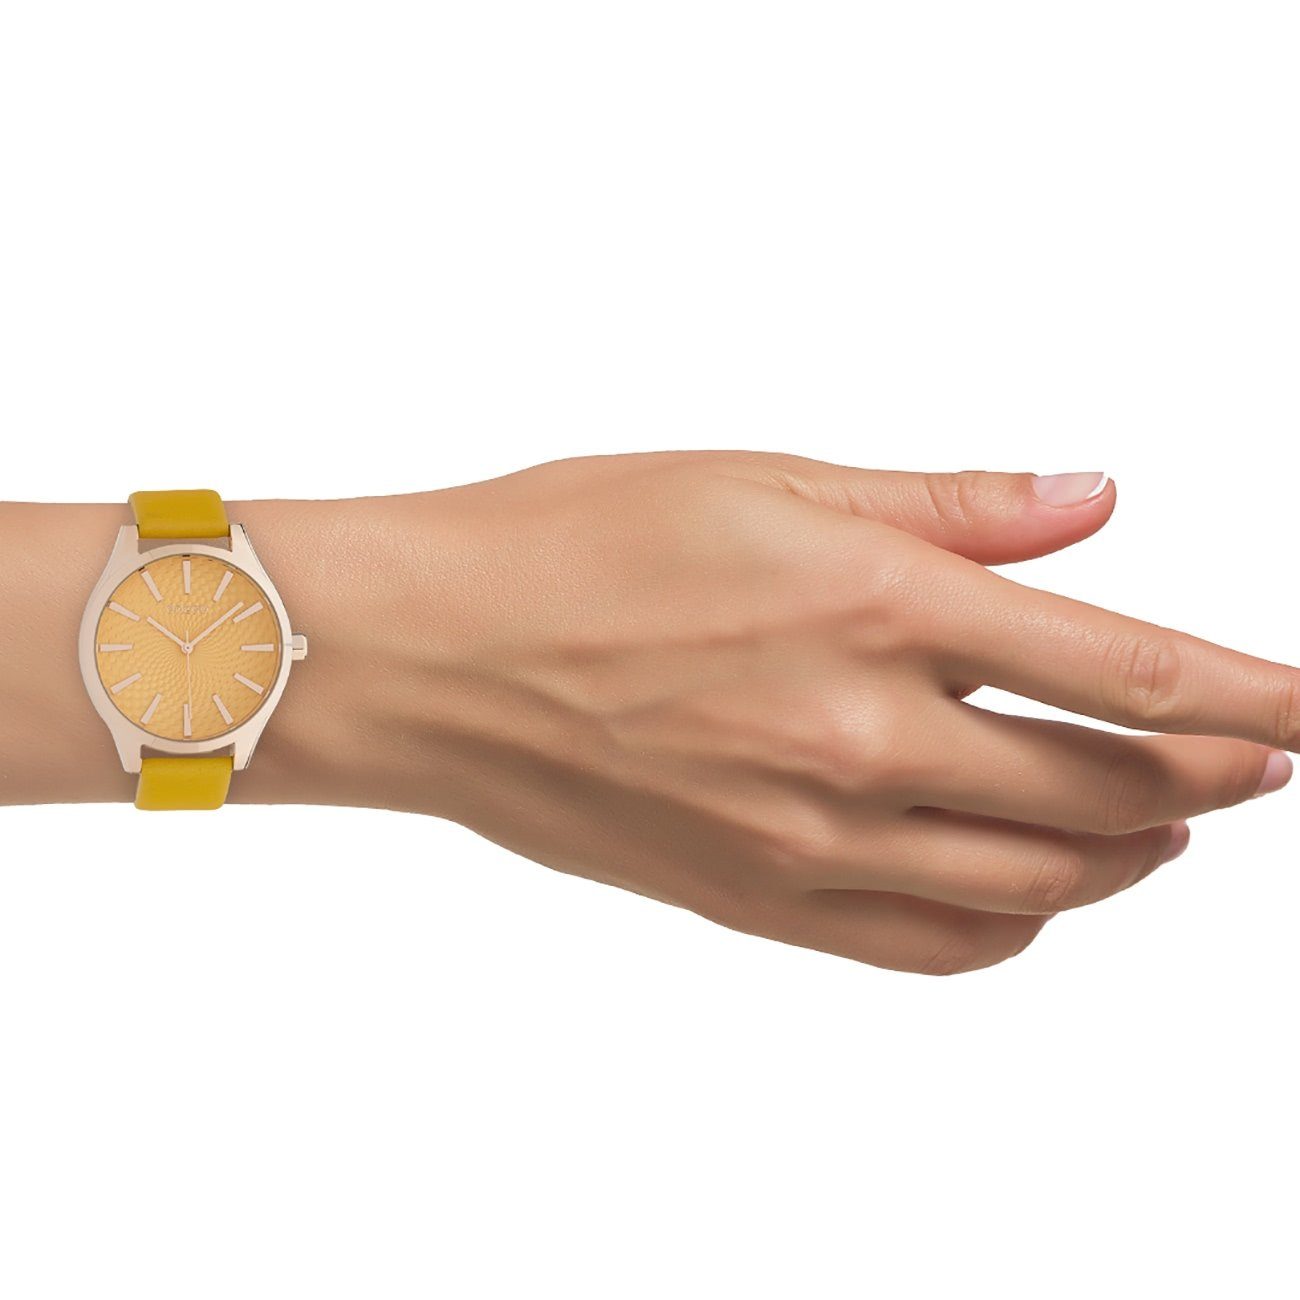 Lederarmband OOZOO gelb, Fashion Timepieces, Damen groß Oozoo Damenuhr rund, 42mm), Quarzuhr Armbanduhr OOZOO (ca.